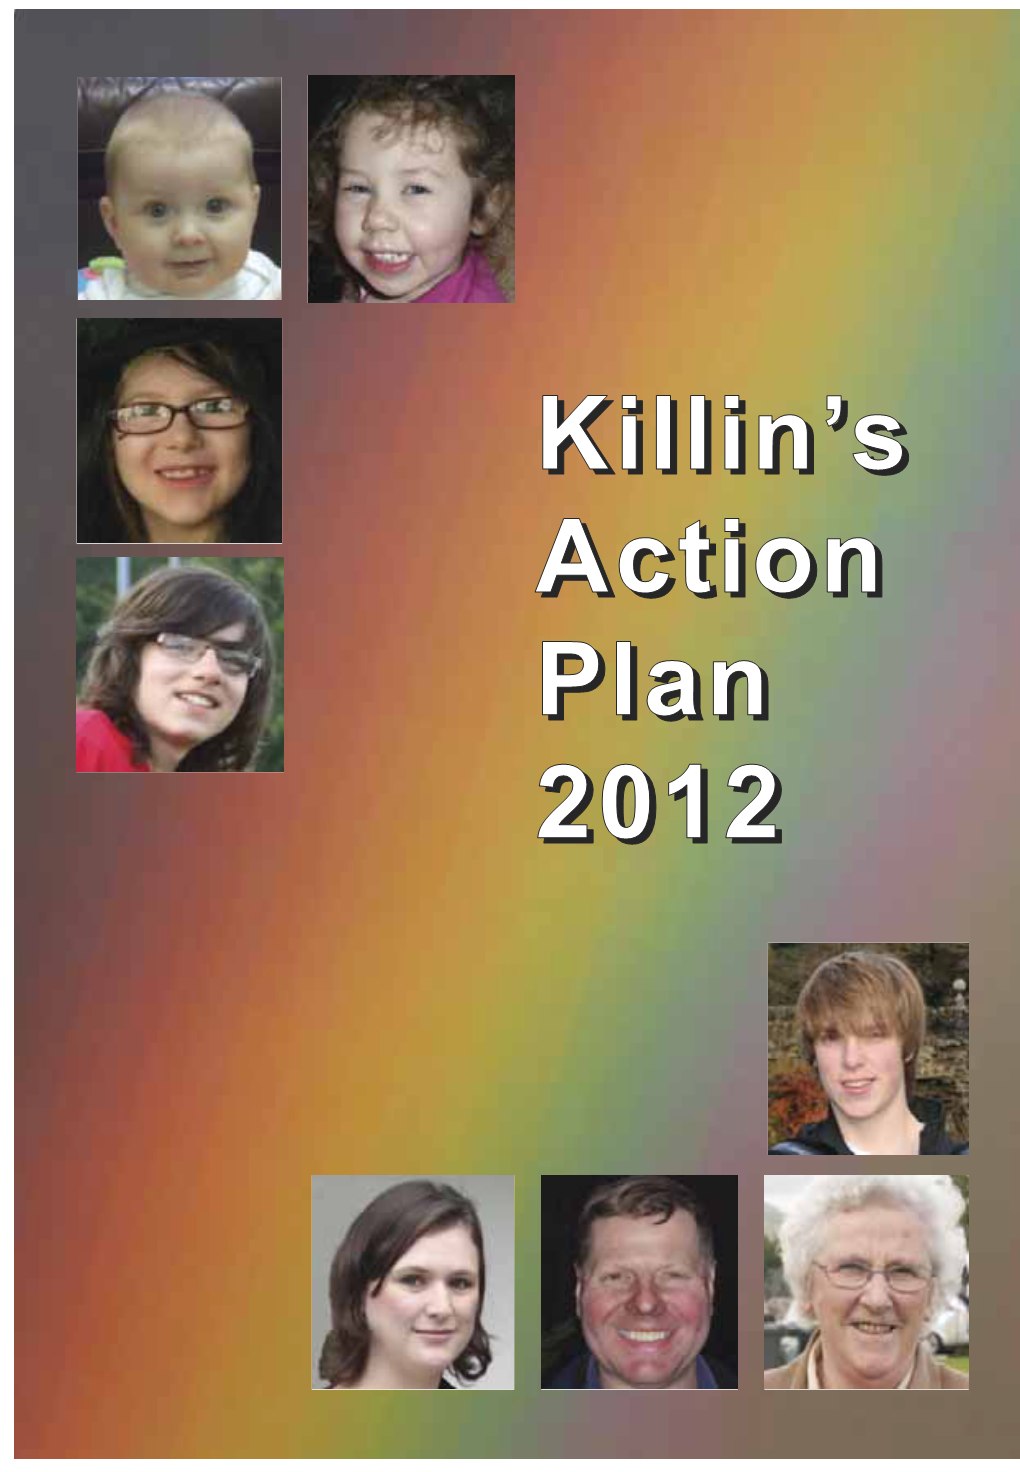 Killin's Action Plan 2012